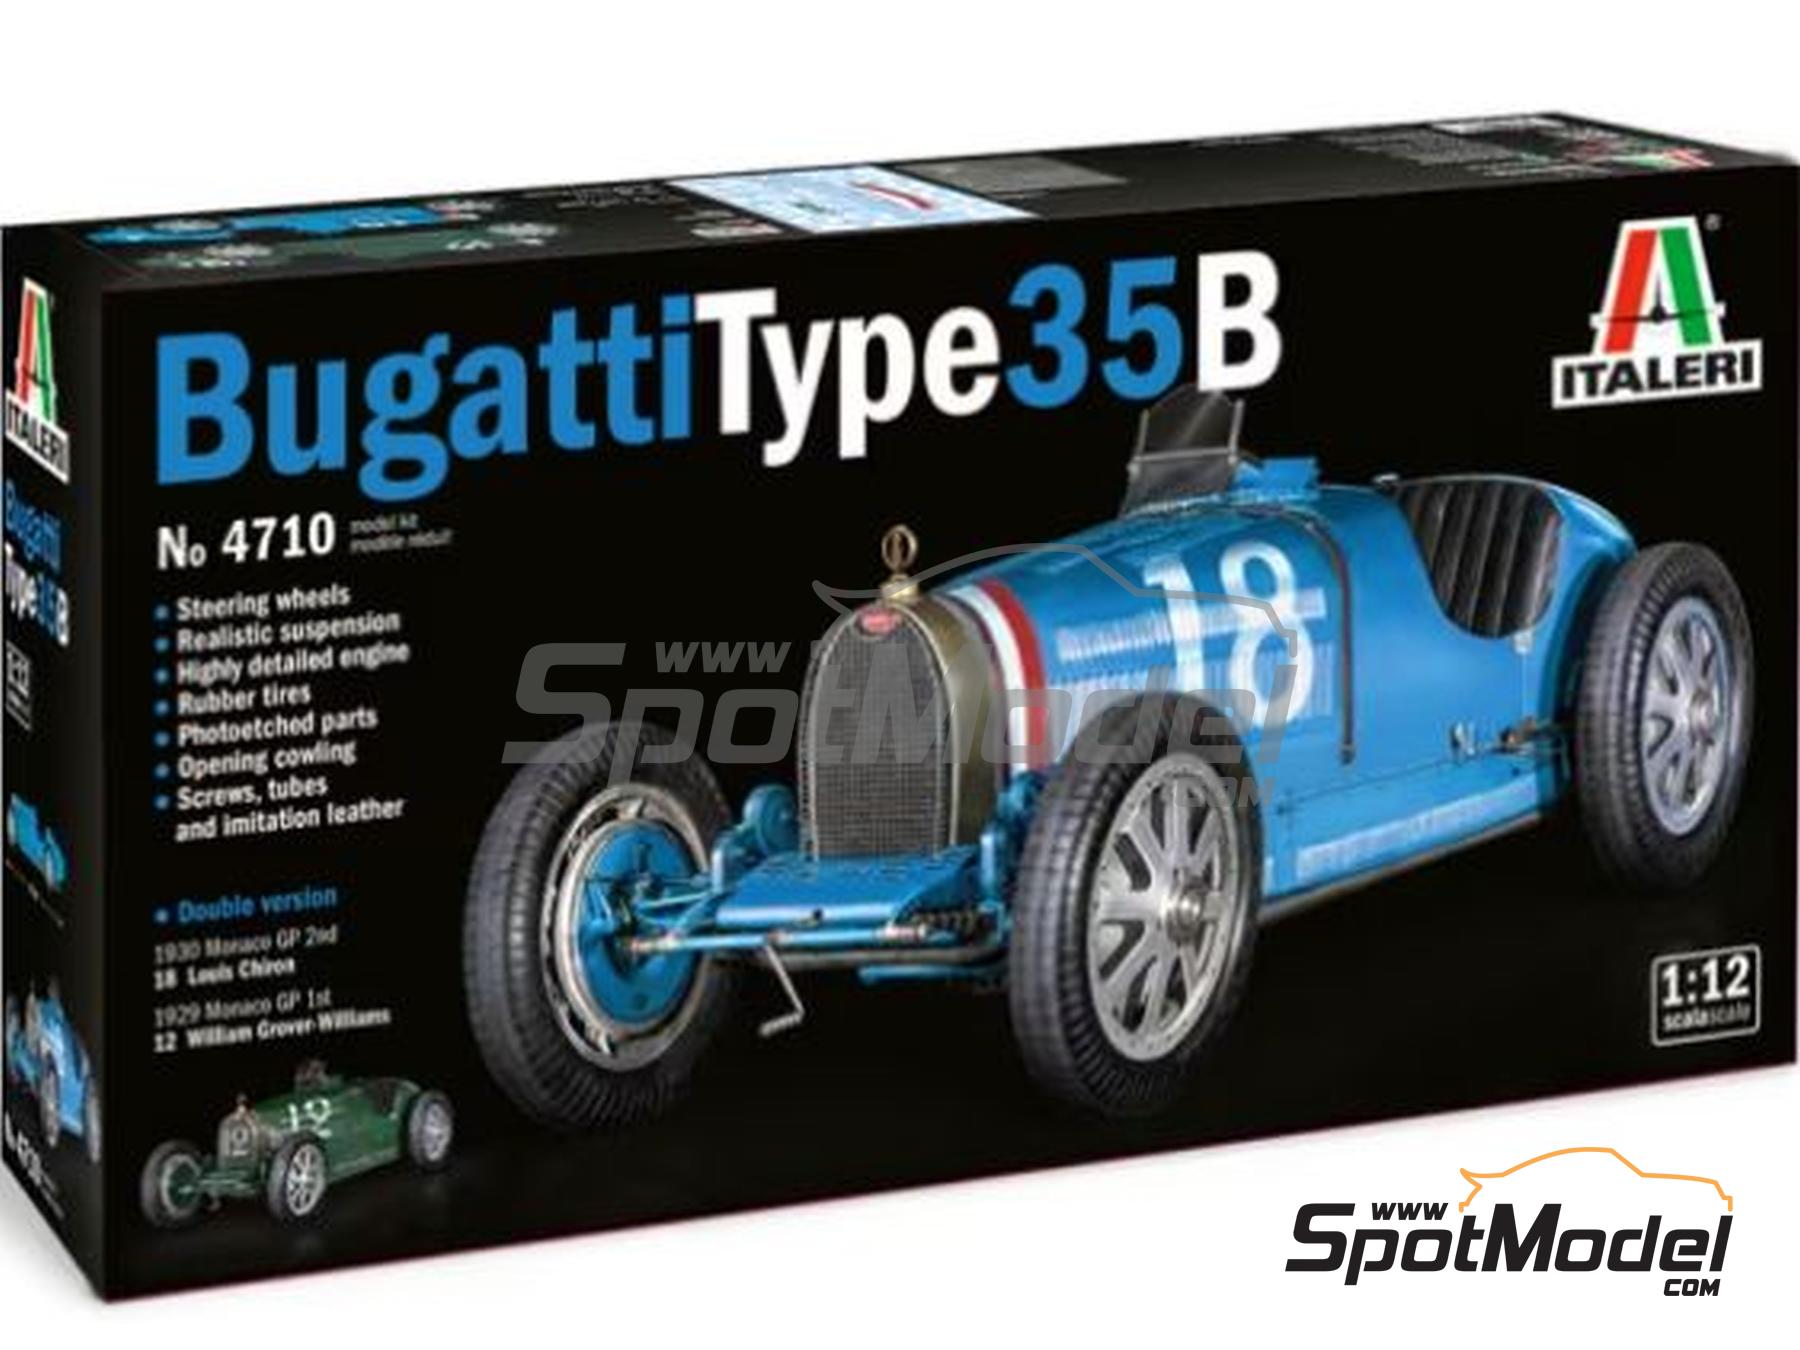 Italeri 4710: Car scale model kit 1/12 scale - Bugatti Type 35B